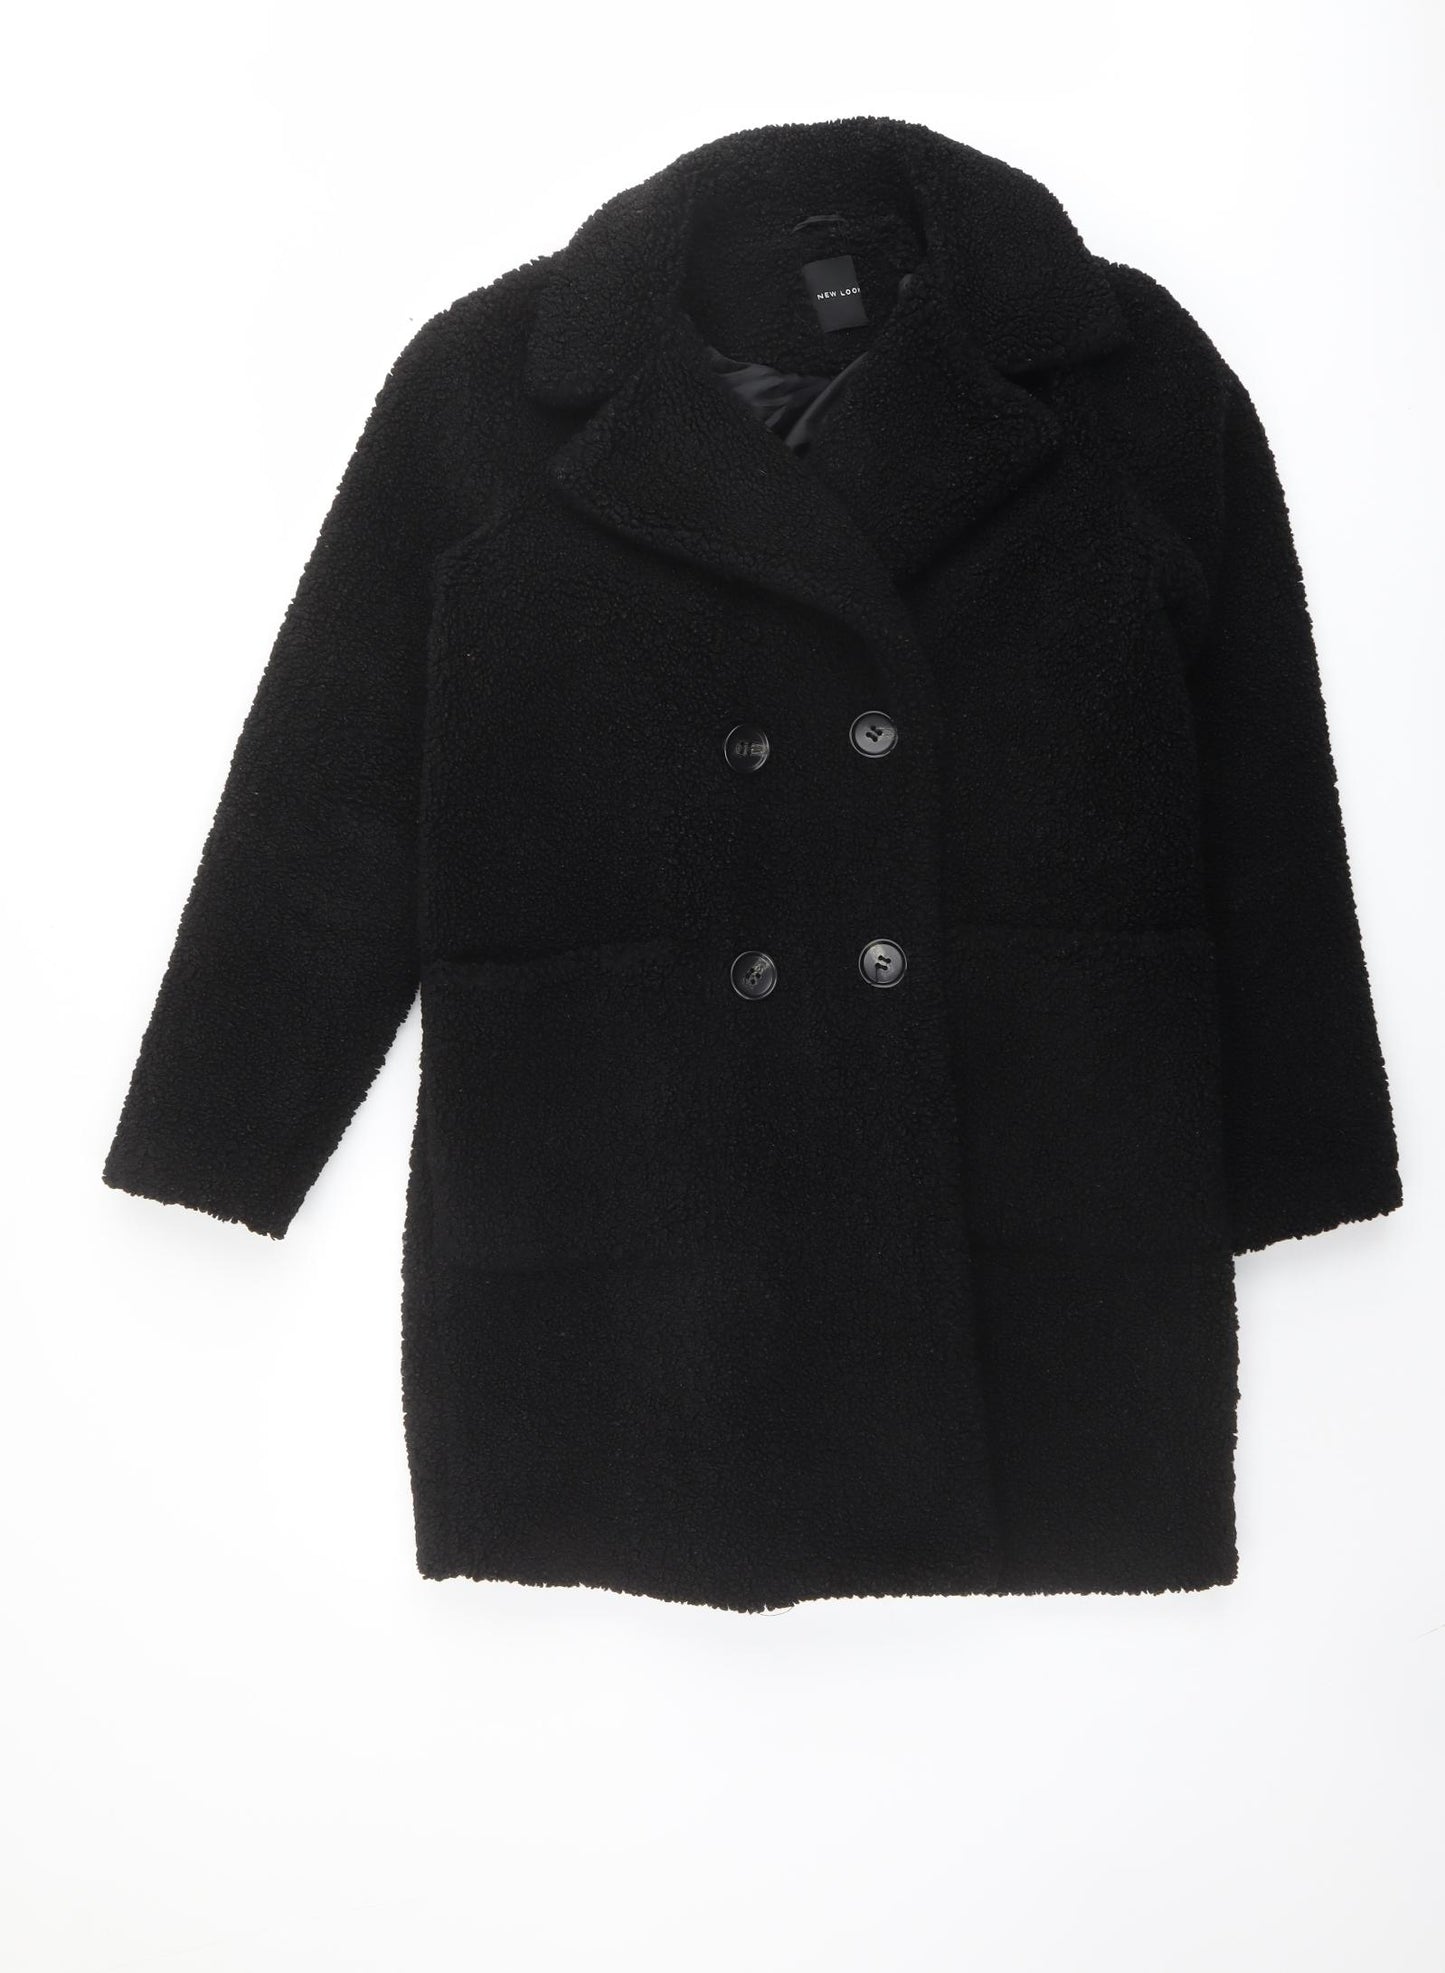 New Look Womens Black Overcoat Coat Size 10 Button - Teddy Bear Style